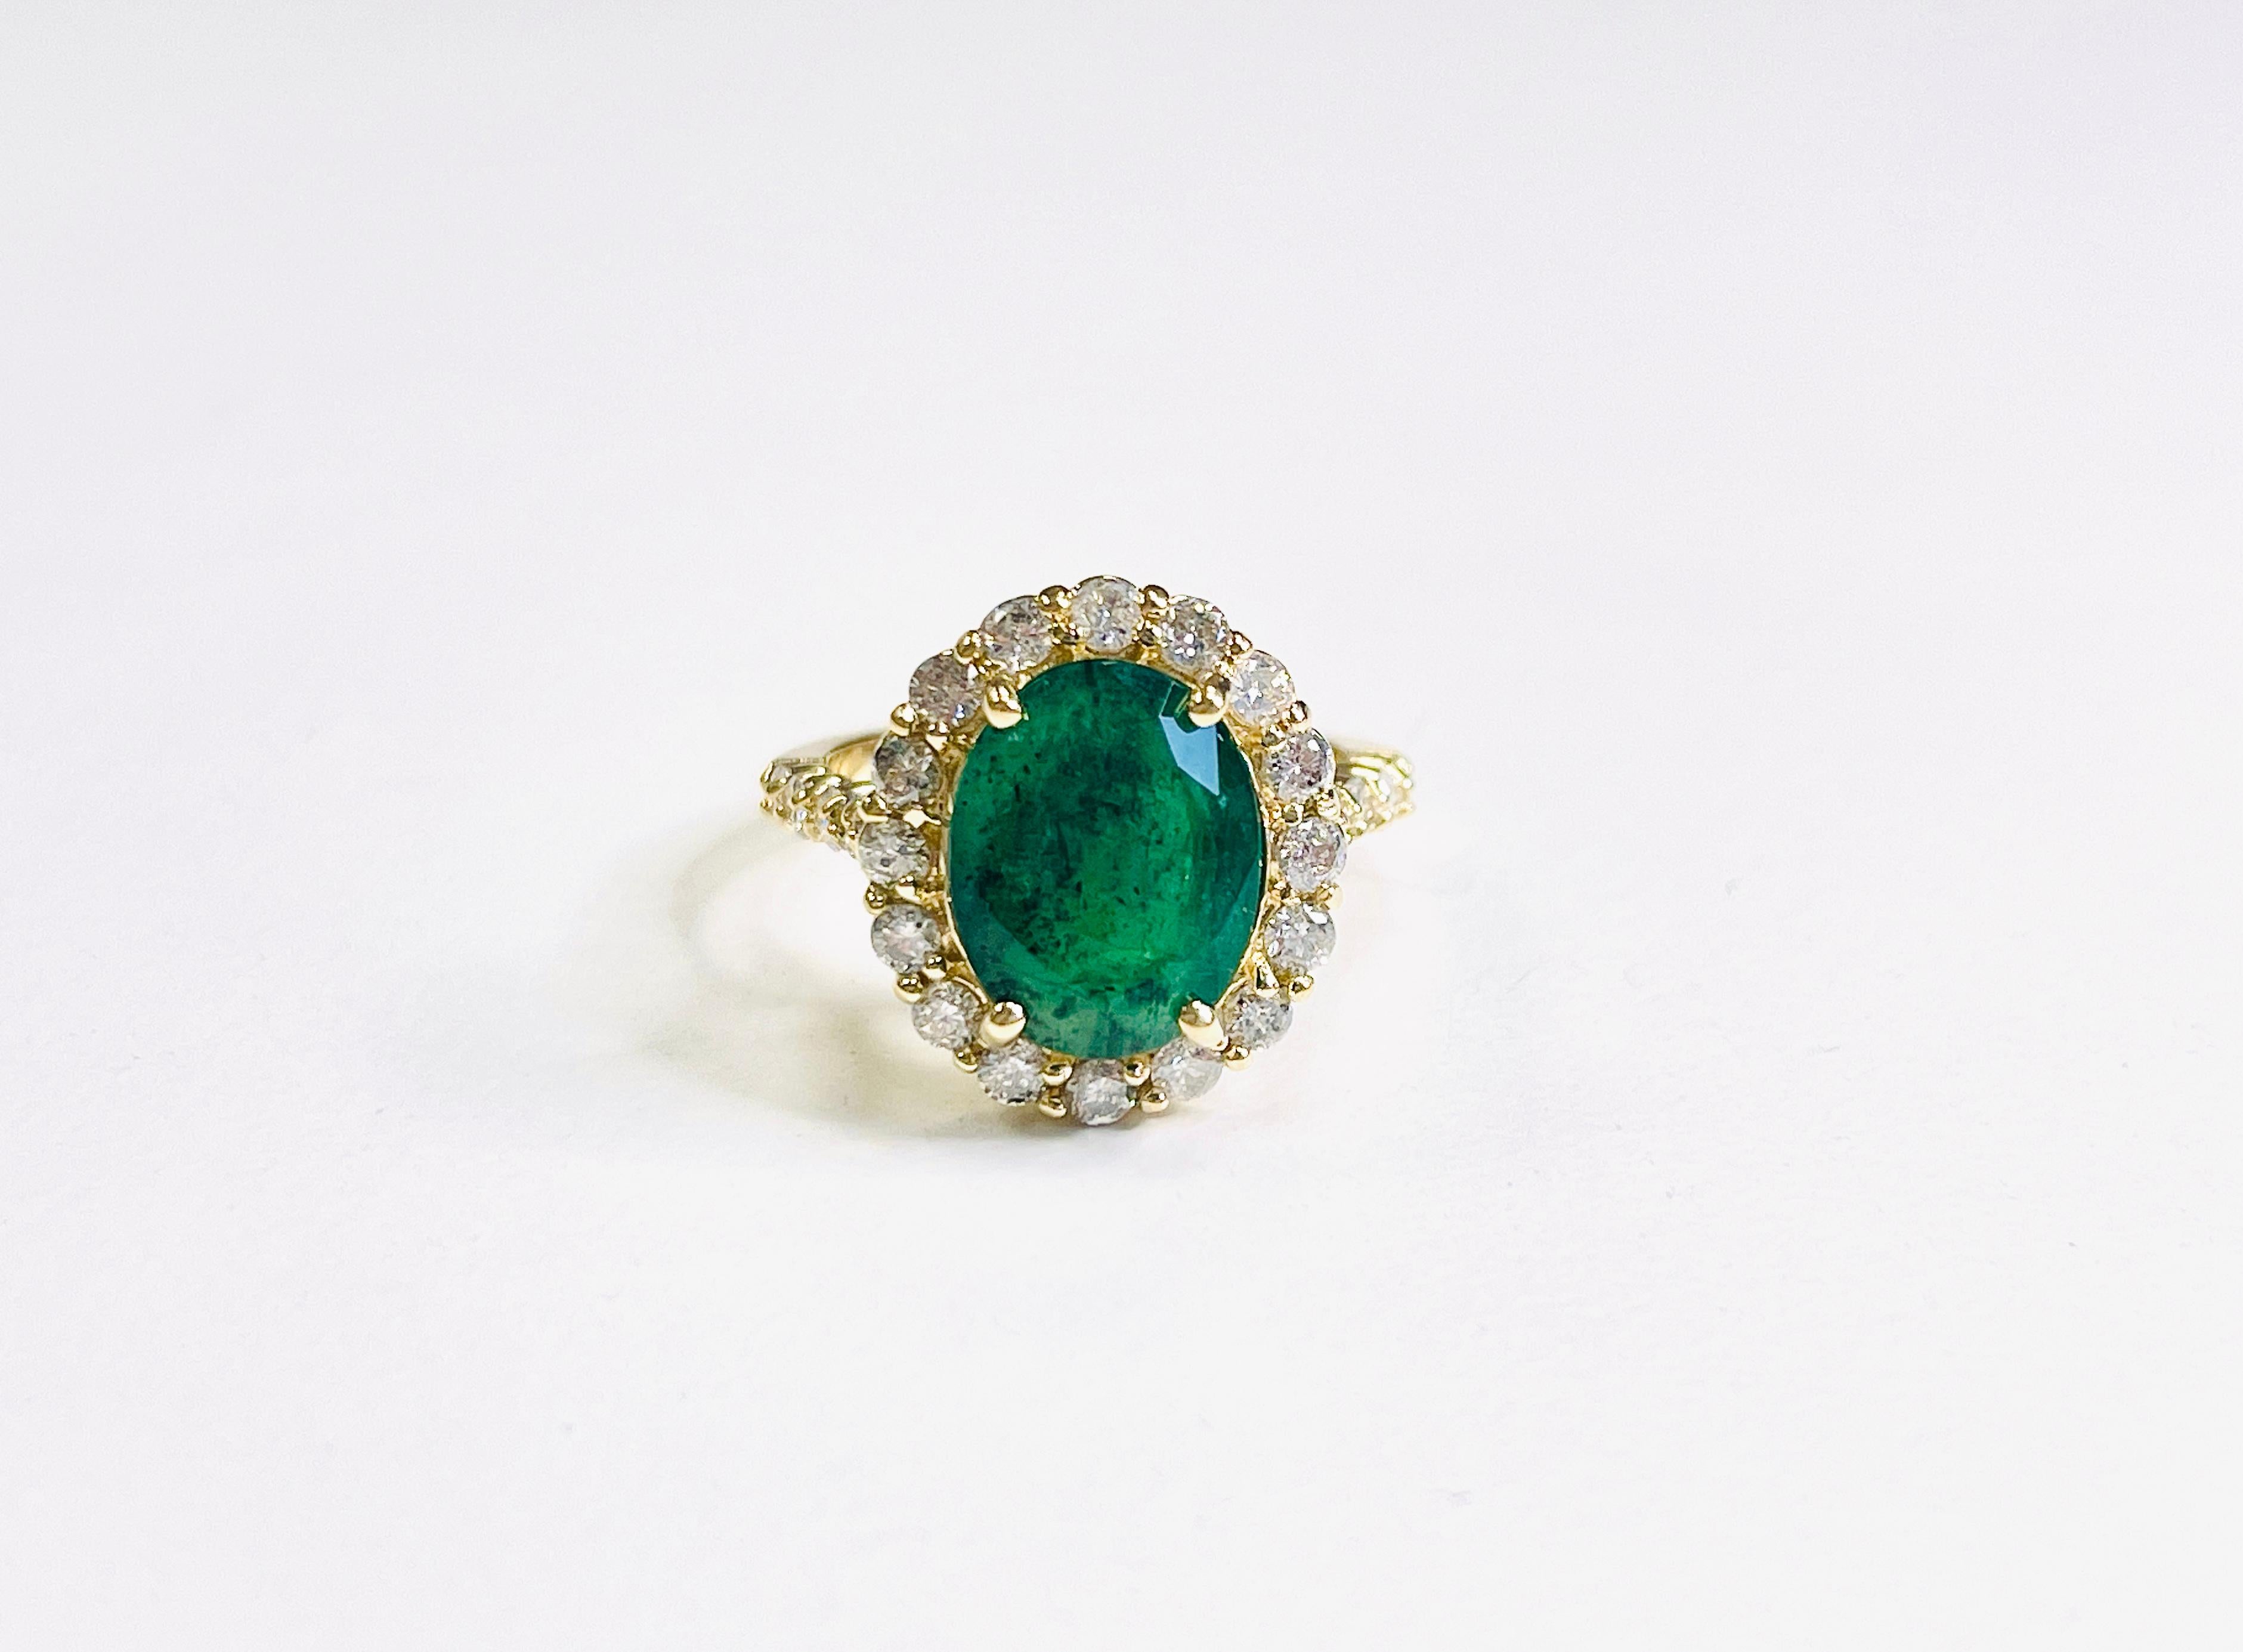 3.20 Carat Emerald Diamond 14K Yellow Gold Ring
1.04Carat Natural Diamonds 27pieces, 5.56grams, size 6.5, average G-I

*Free shipping within the U.S.*

